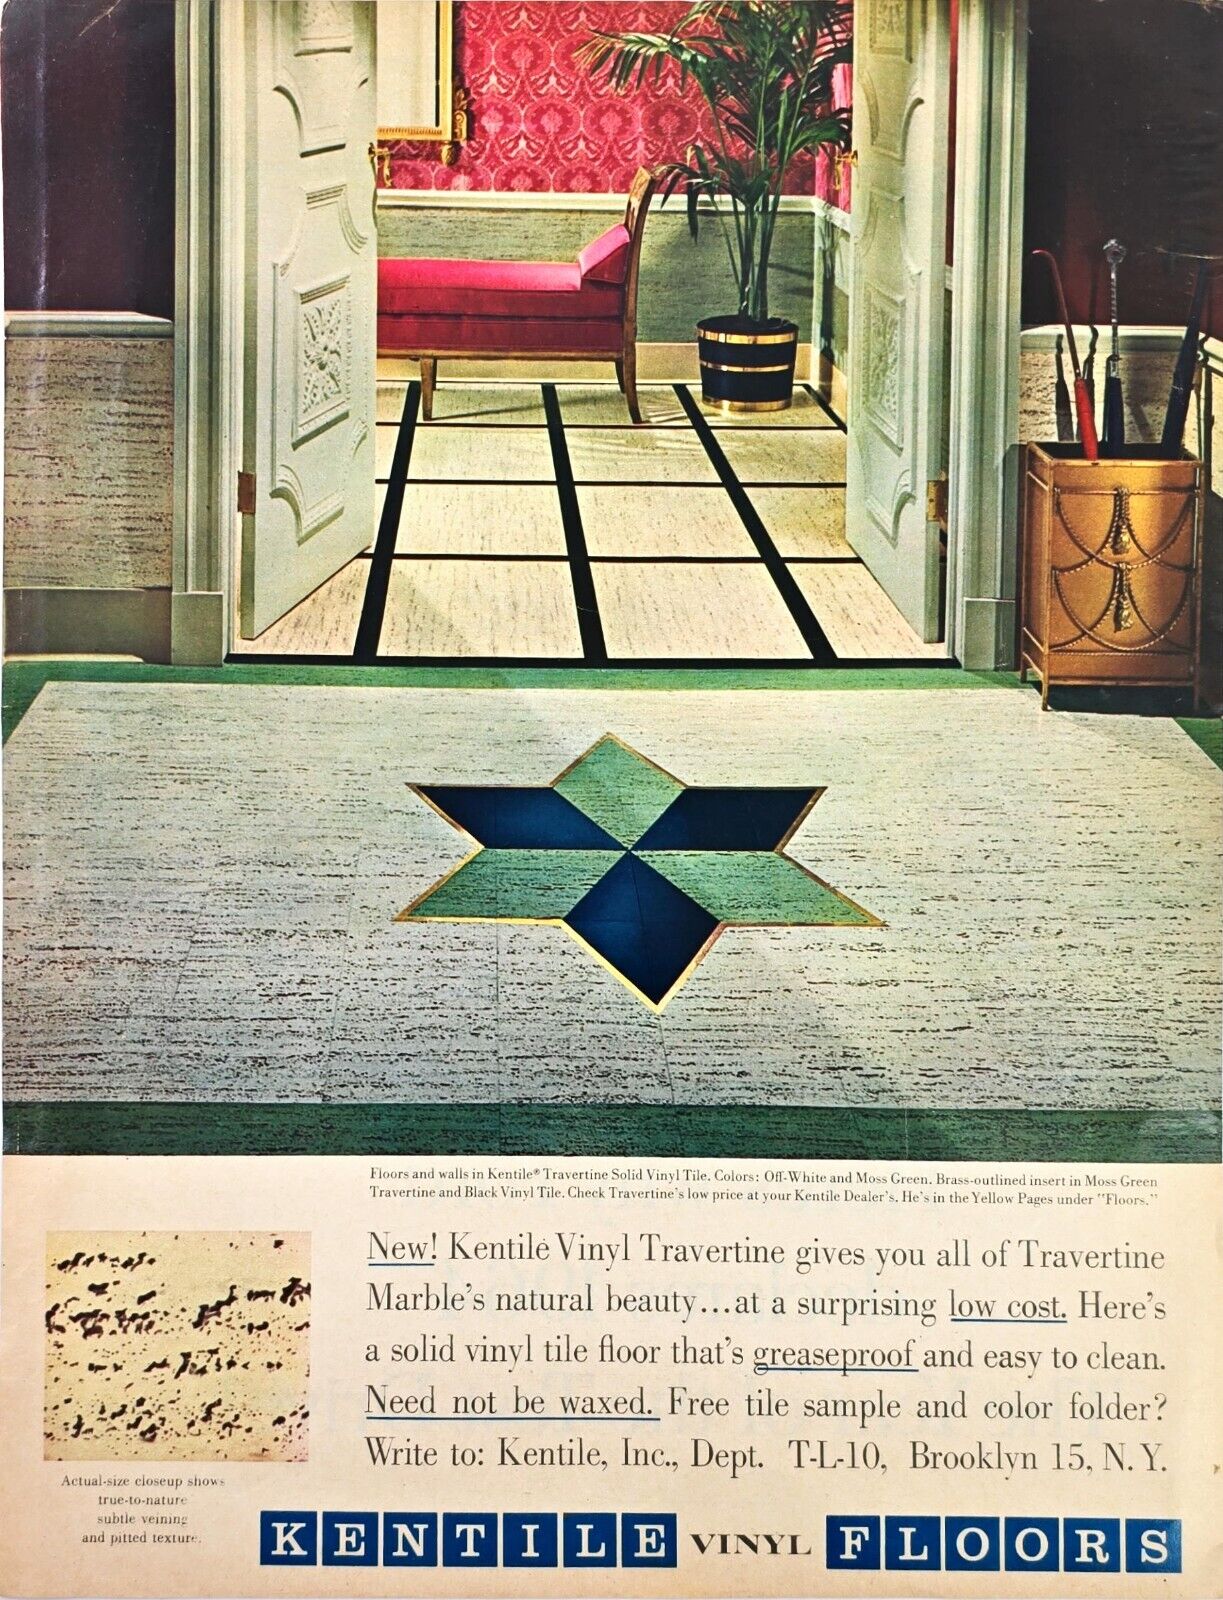 Kentile Vinyl Travertine Floors Vintage 1963 Print Ad 10x13